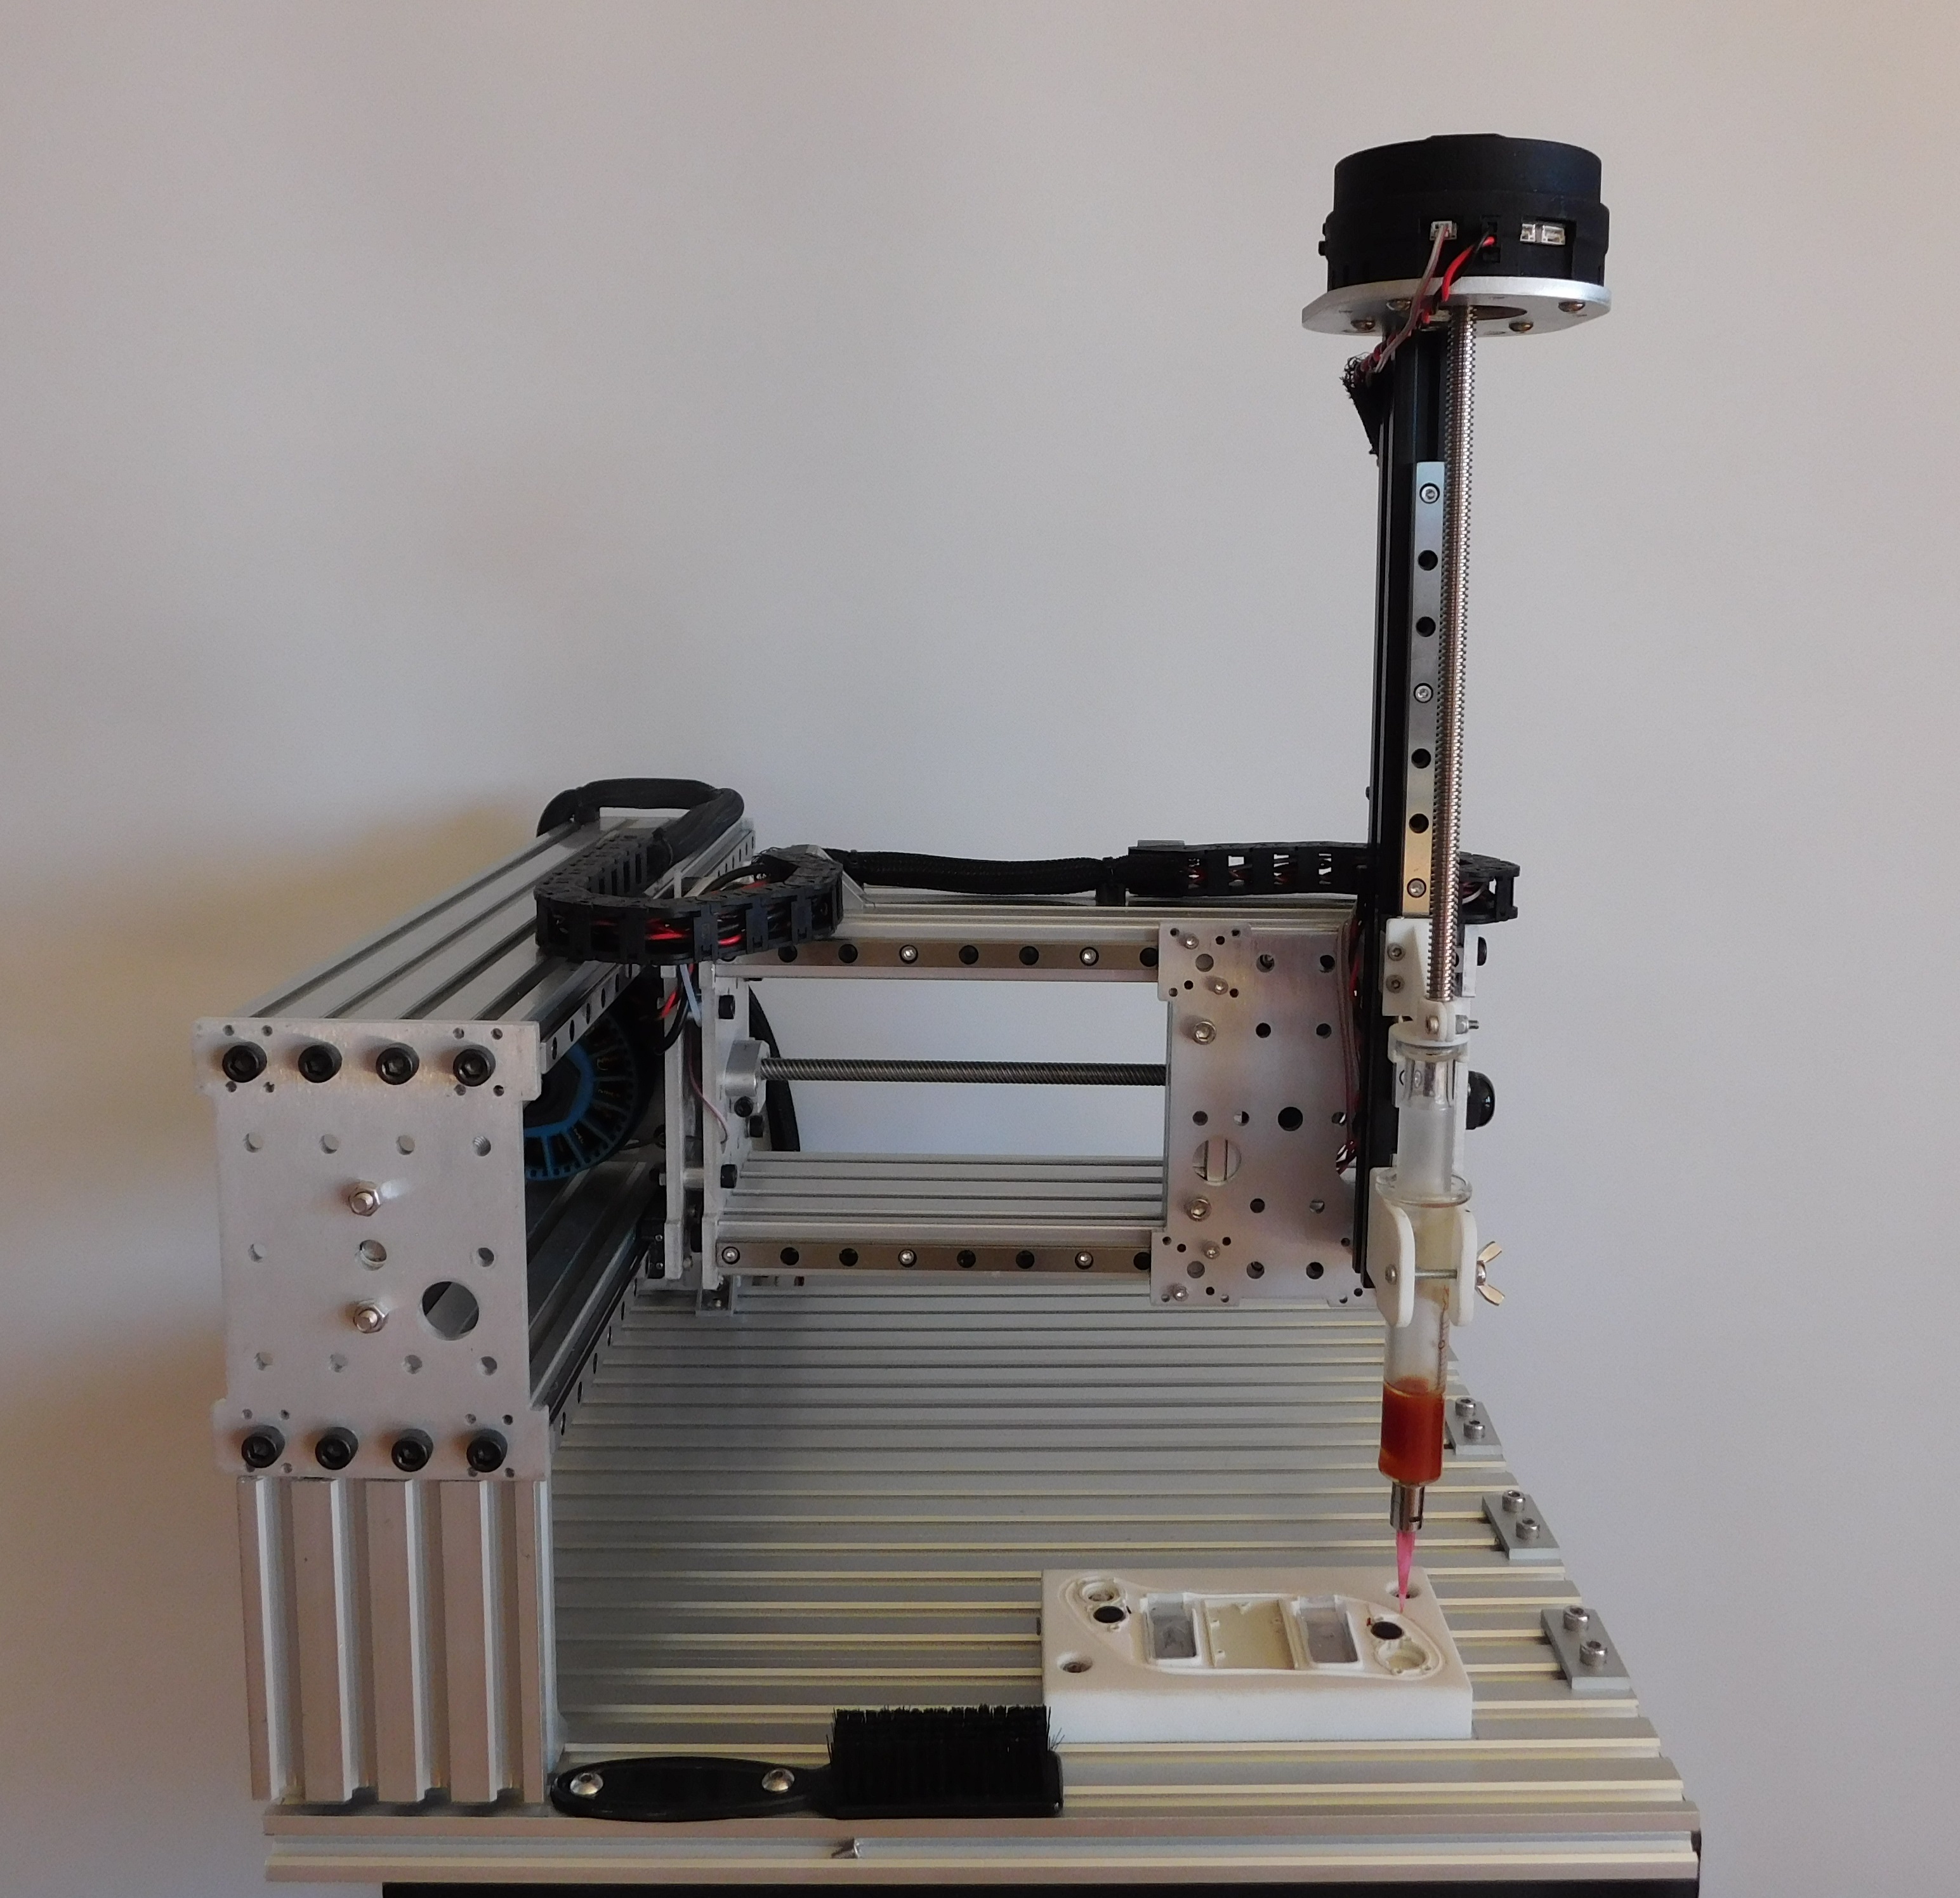 Daily News | Online News YORC Announces Open Source Dispensing Robot